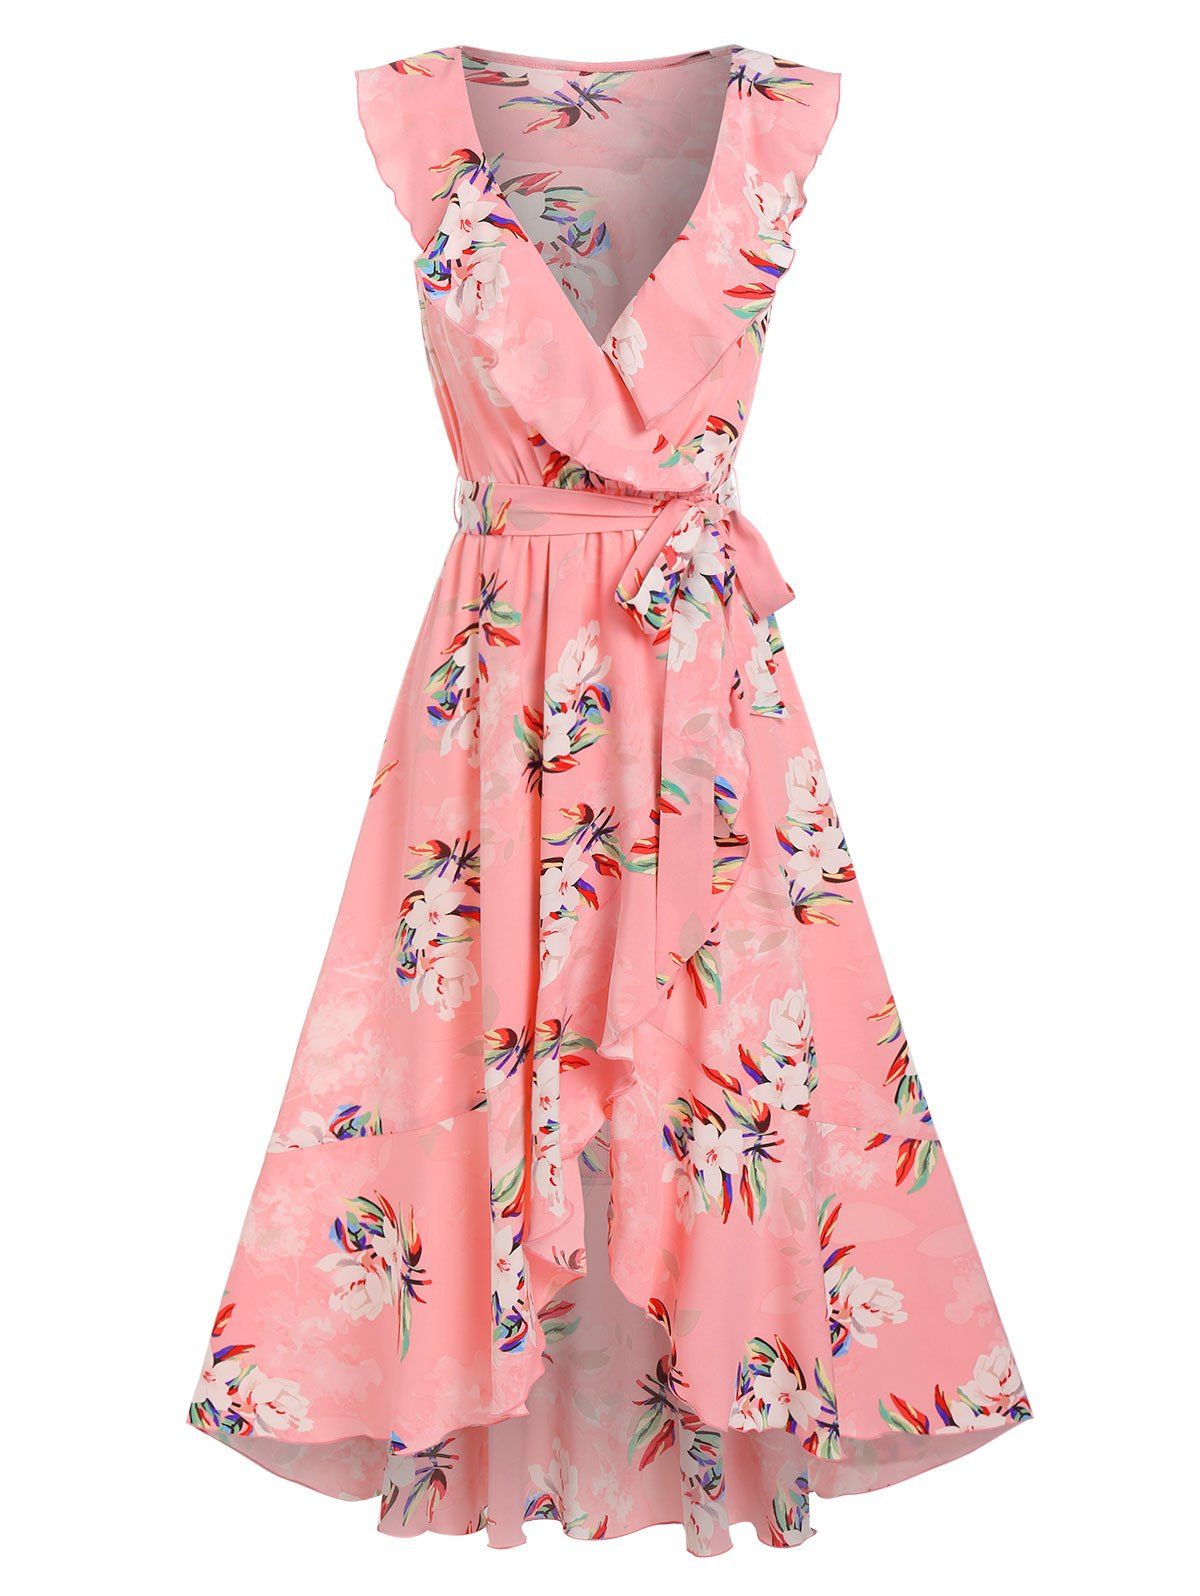 Garden Party Dress Floral Print Cottagecore Dress Surplice Plunge Midi Dress Overlap Belted Dress - LIGHT PINK M